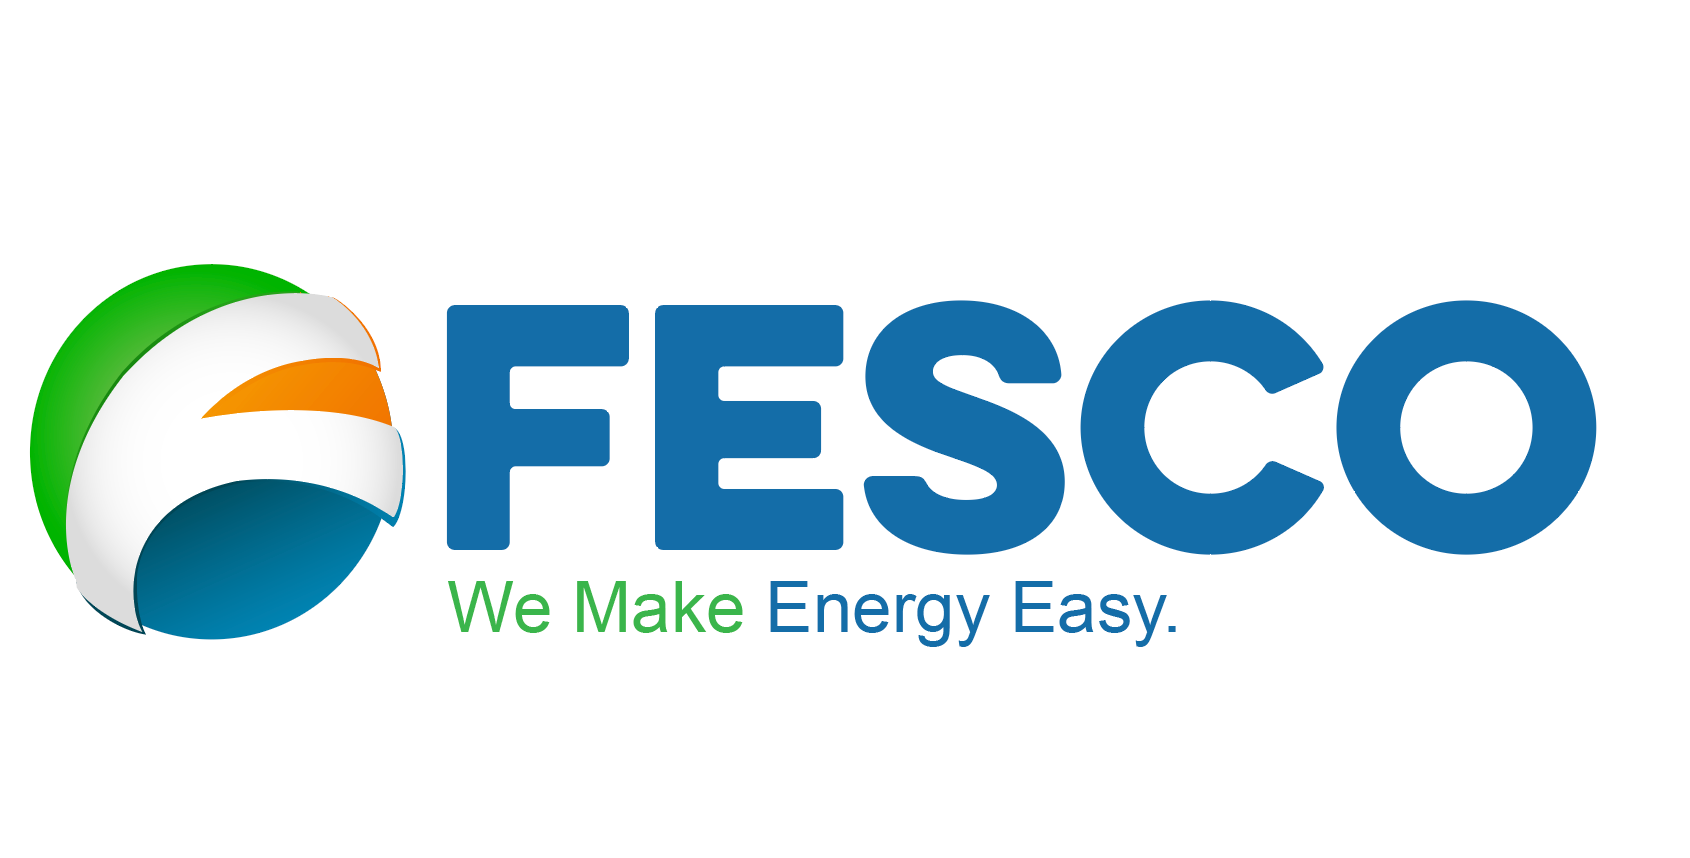 Fesco energy logo with tagline